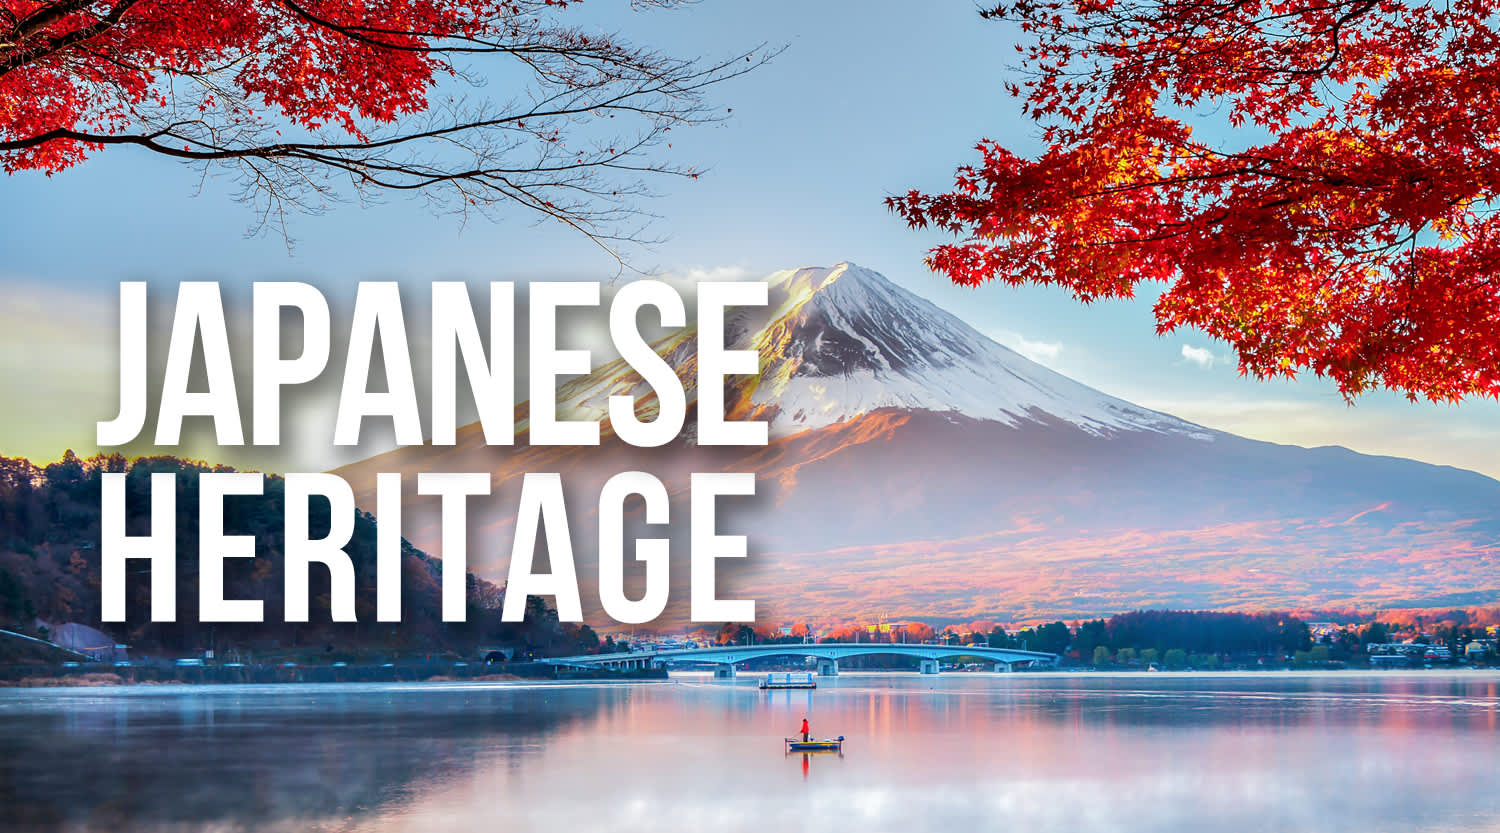 Japanese Heritage